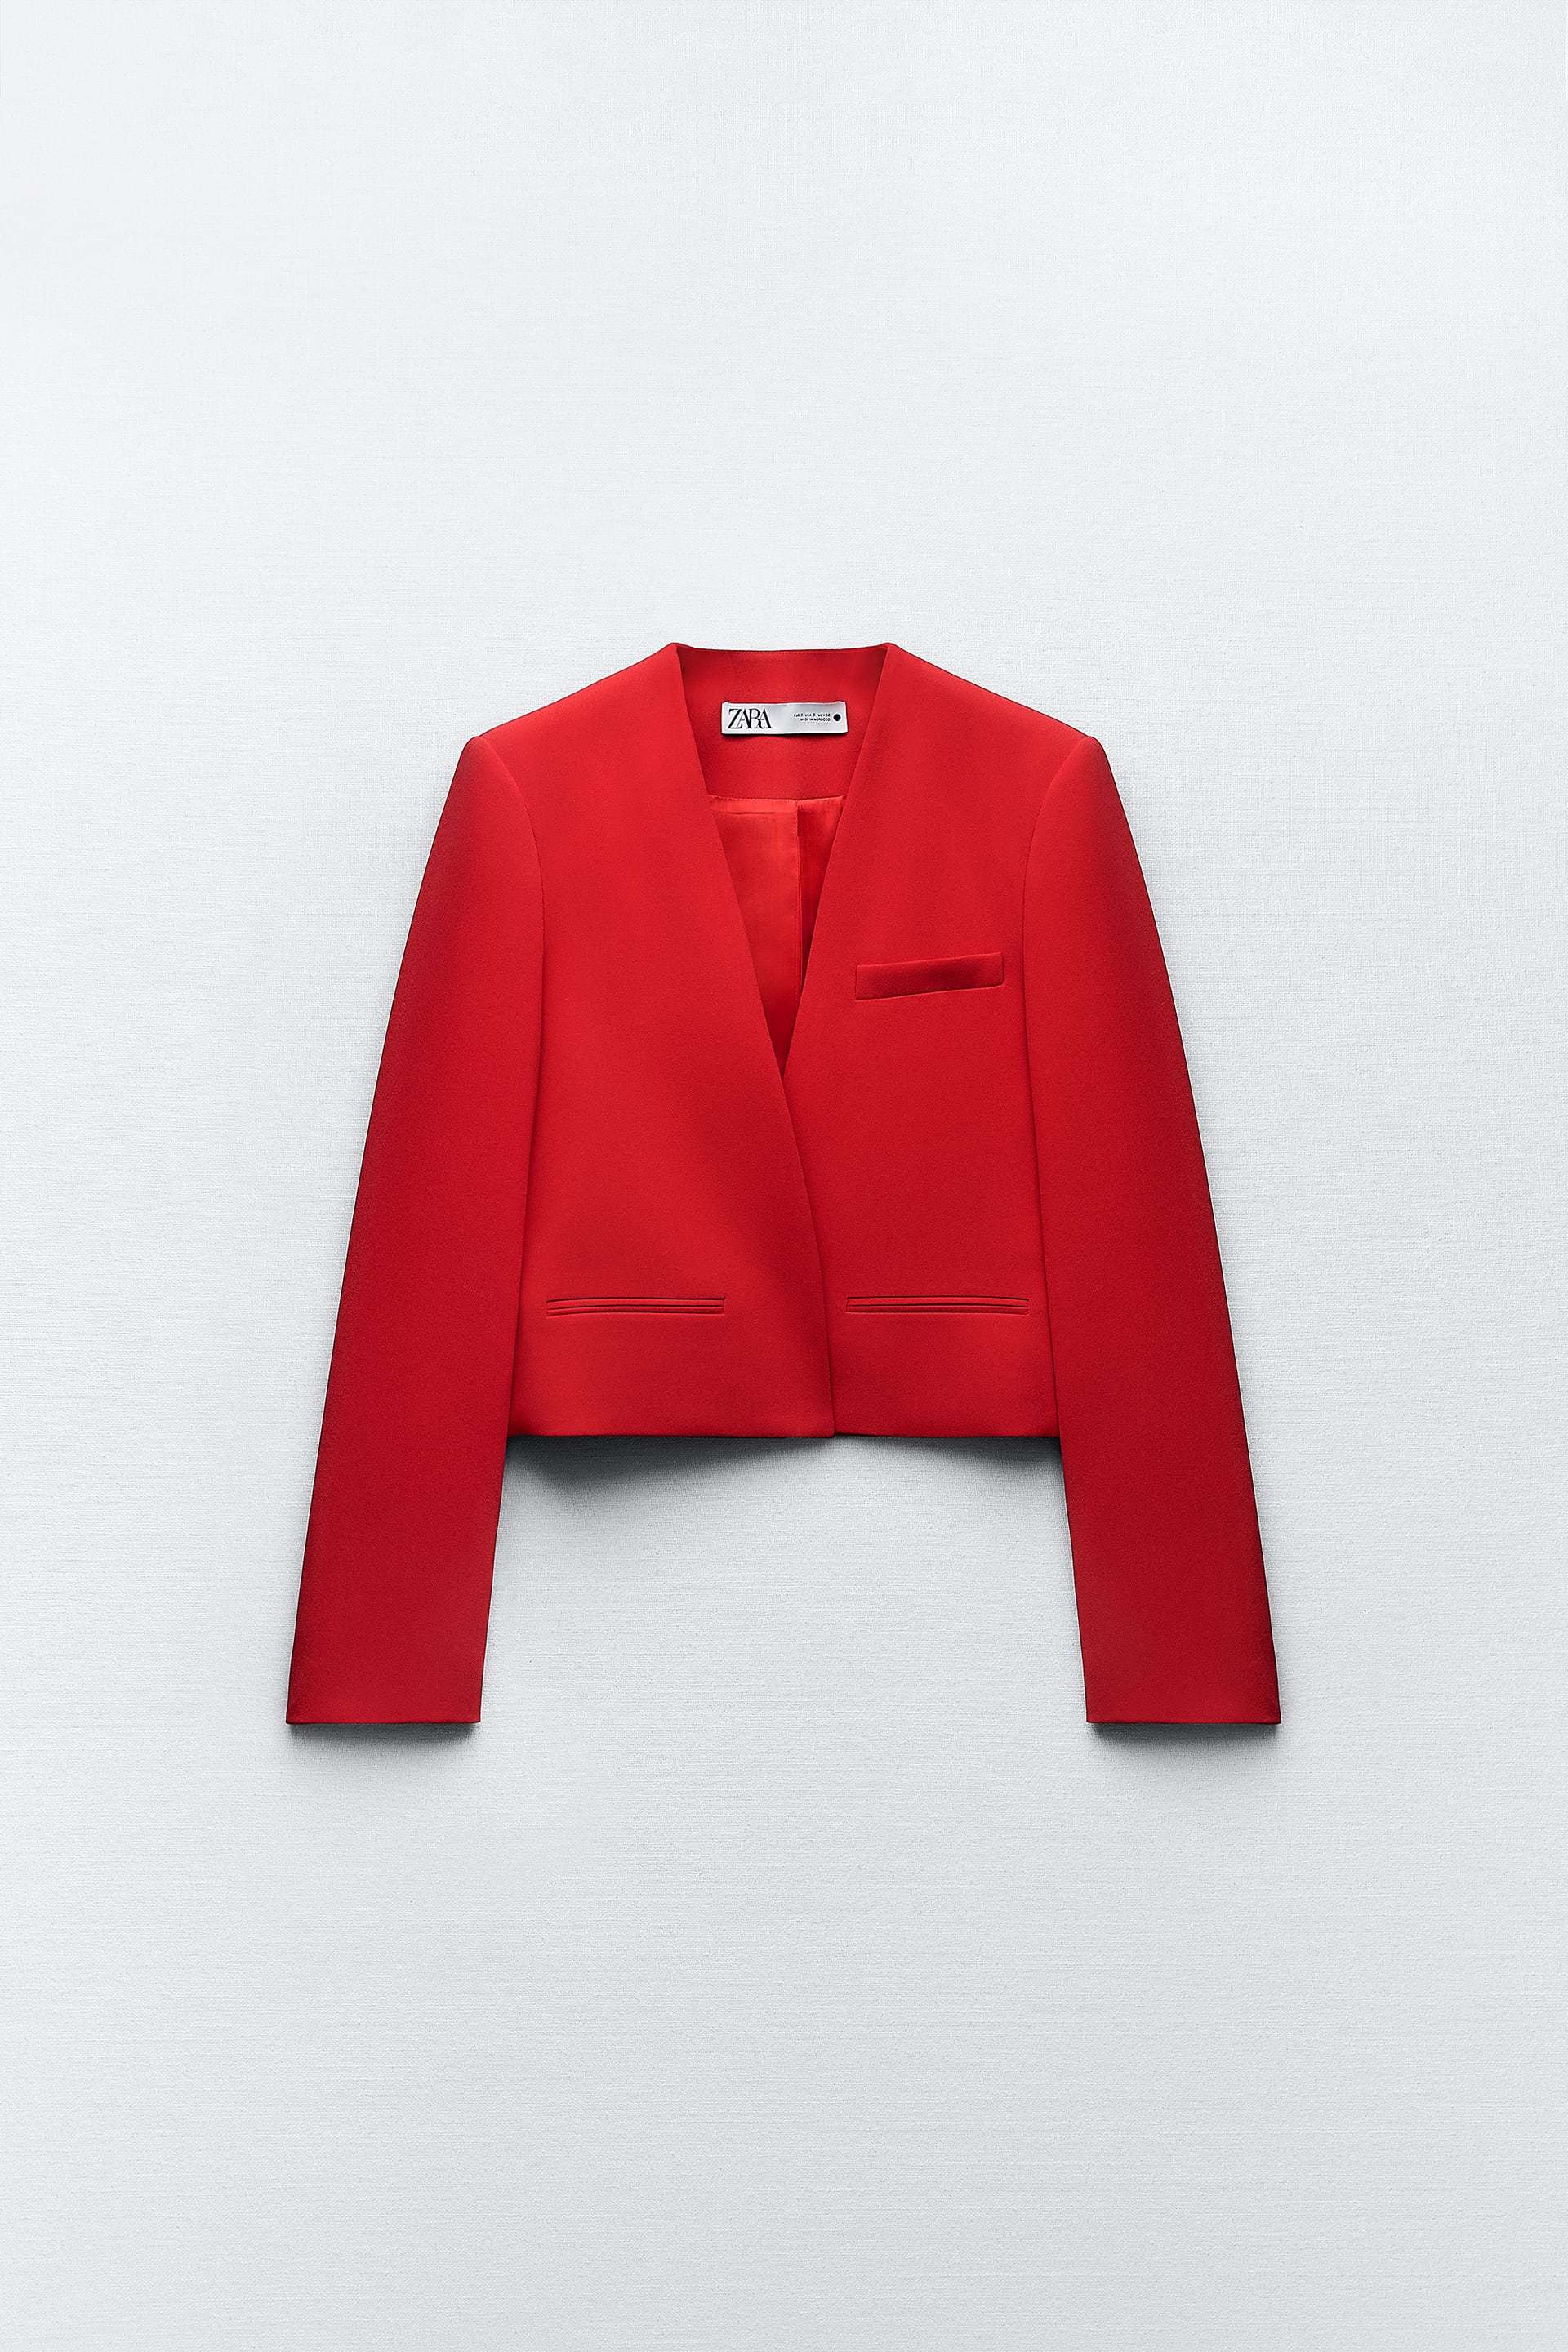 Blazer corta roja de Zara (49,95 euros).